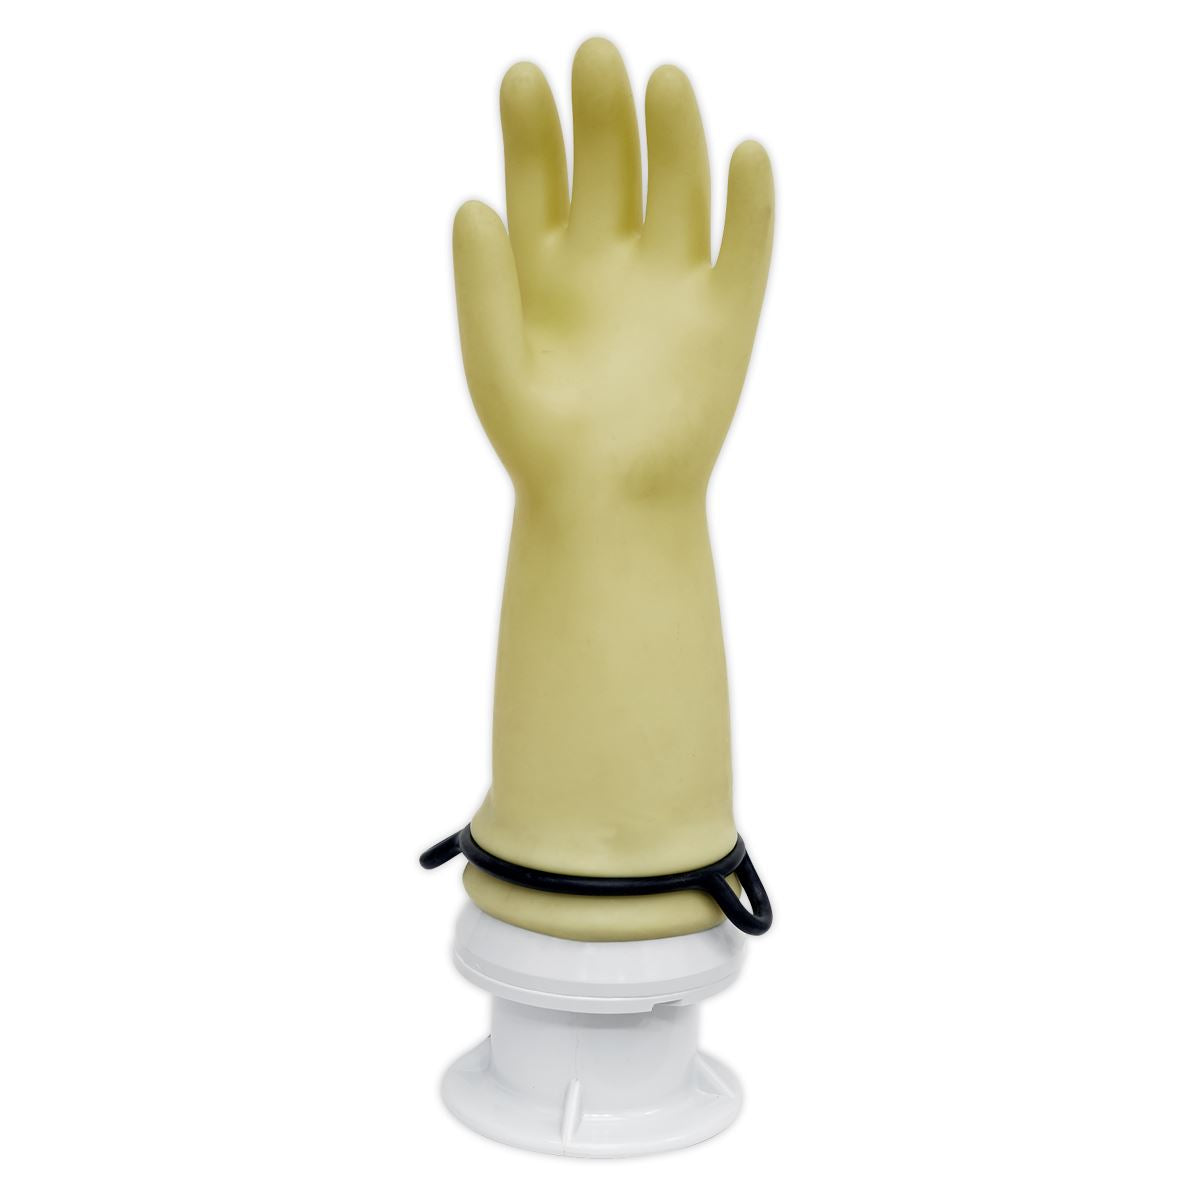 Sealey Pneumatic Glove Tester